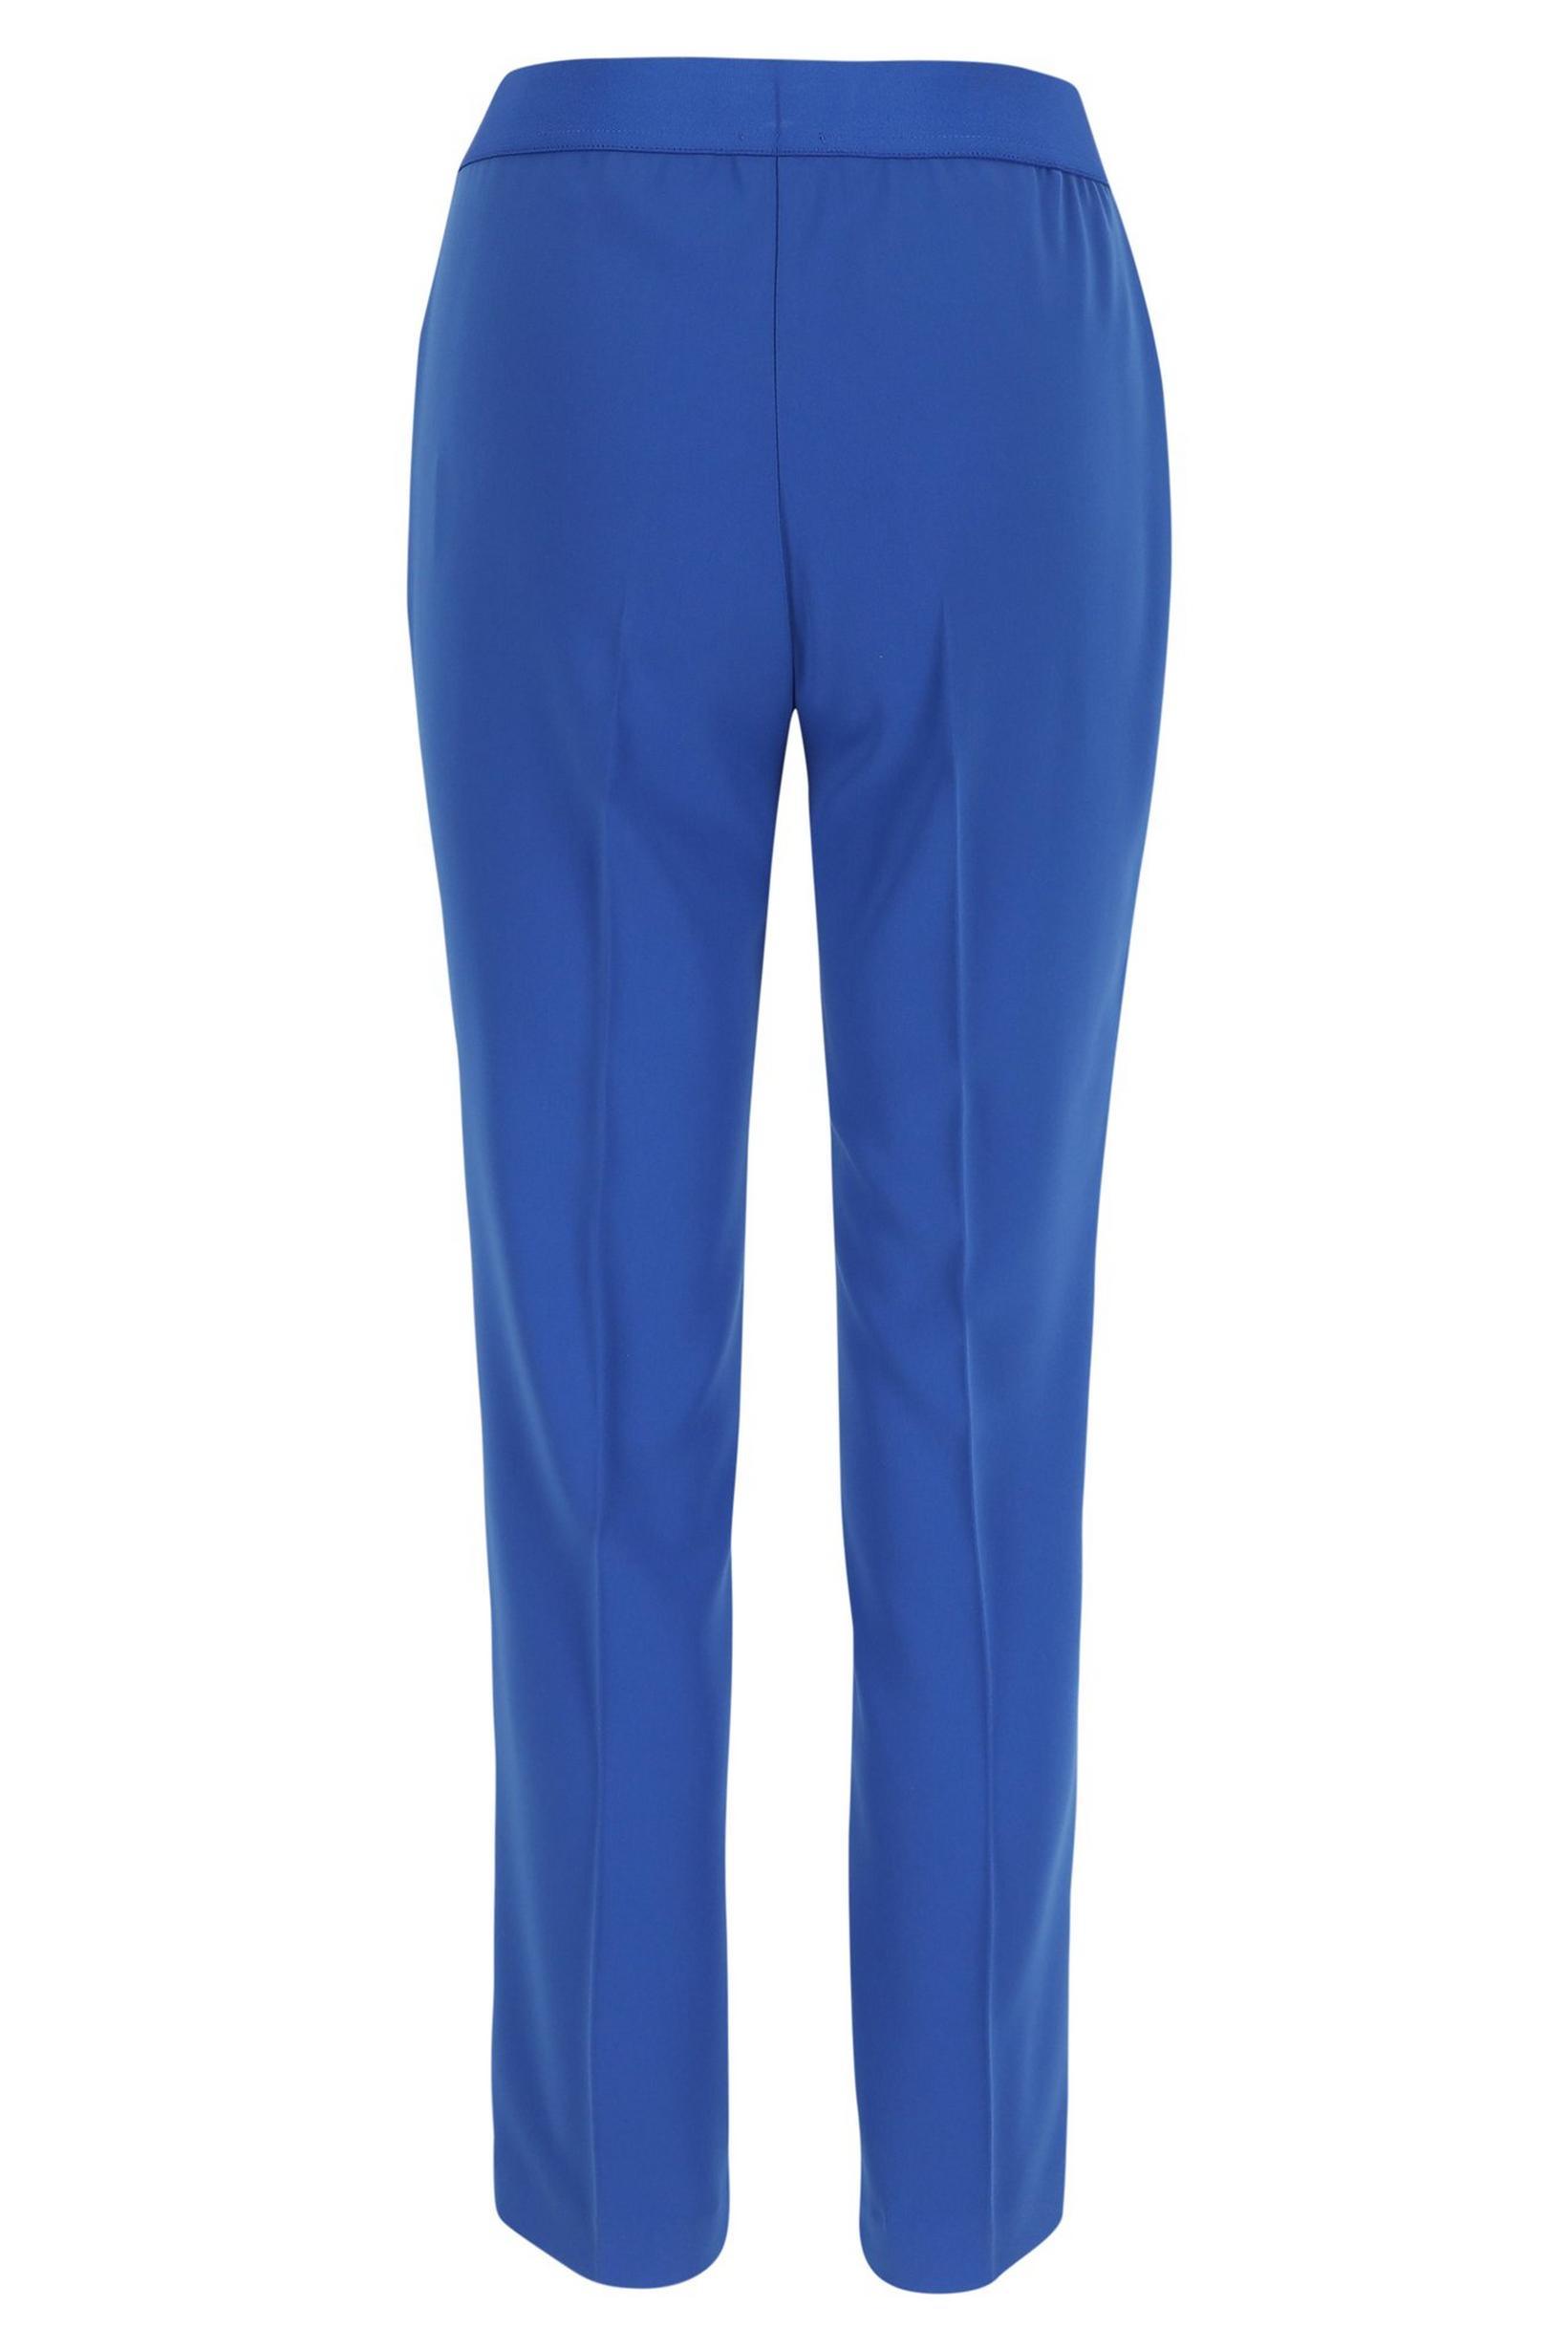 Broek Blauw Mayerline ( X-Cadox 8000/060 ) - Delaere Womenswear